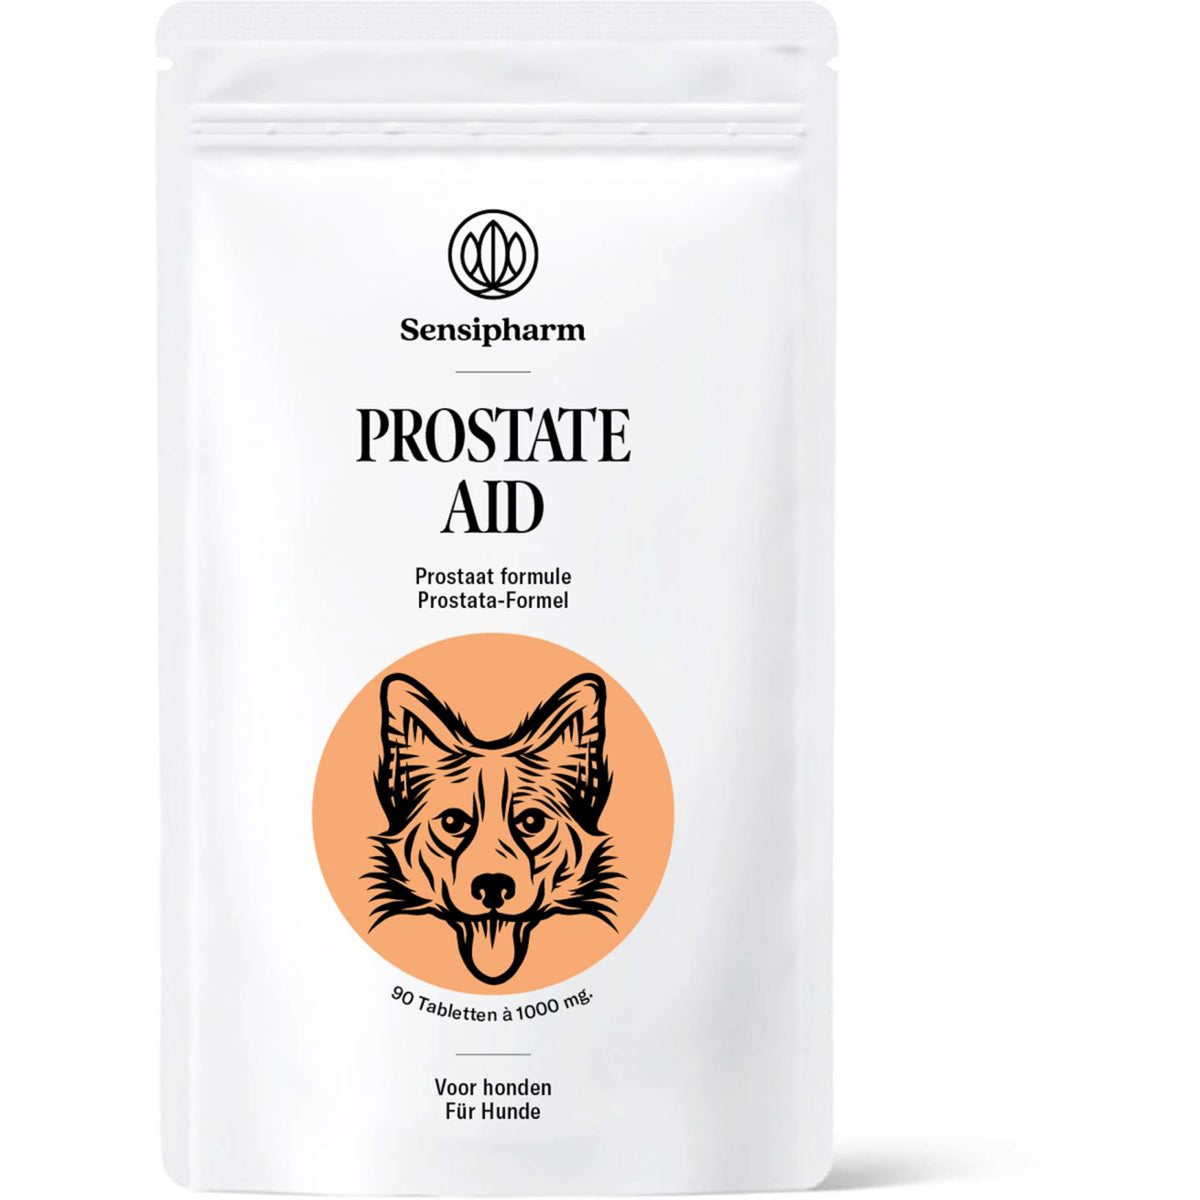 Sensipharm Prostate Aid